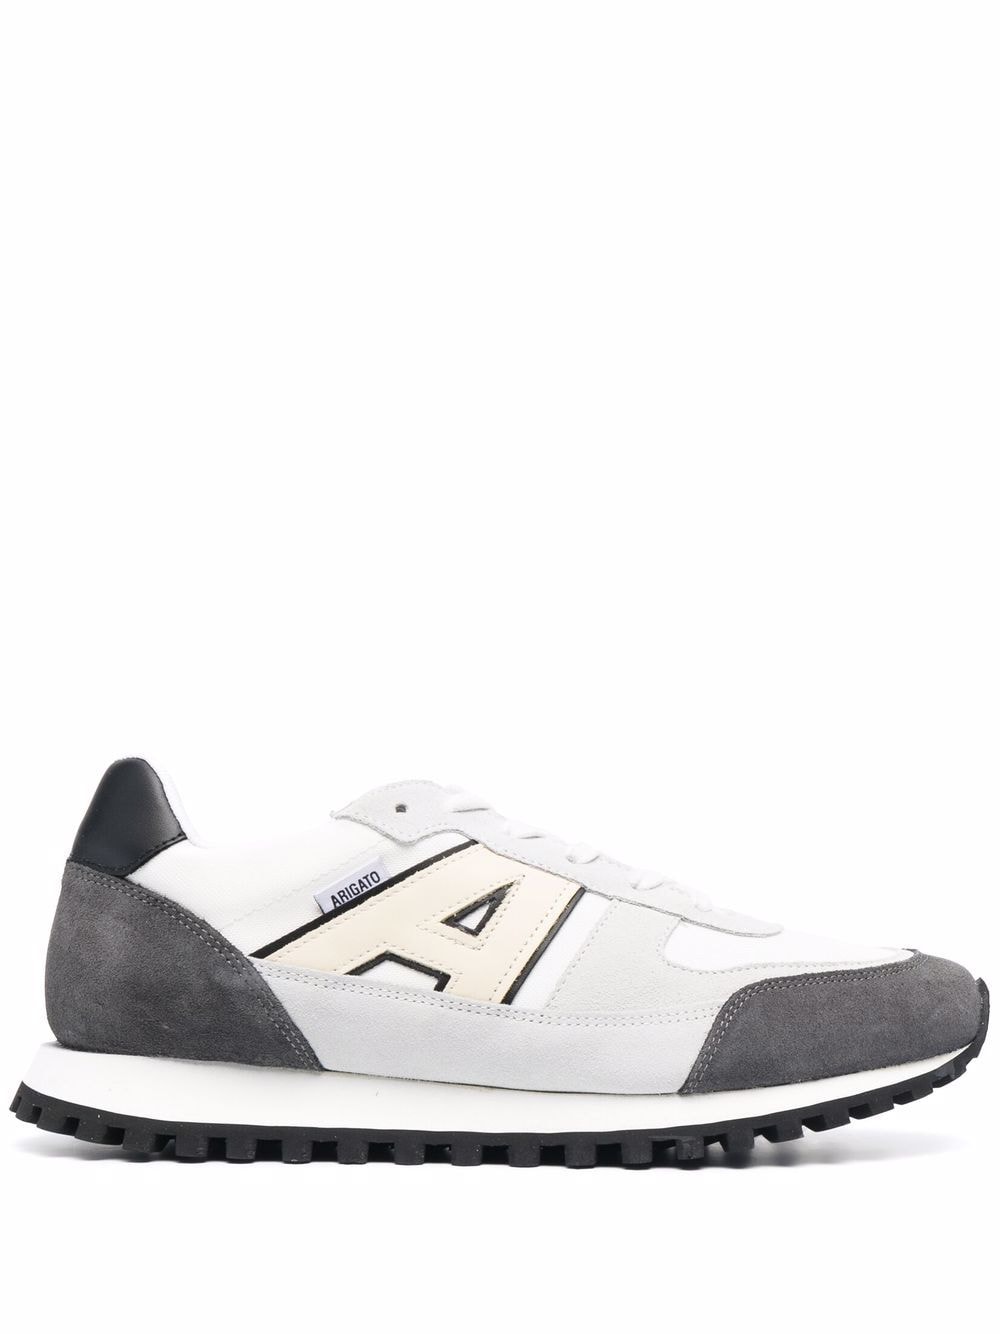 Axel Arigato Aeon Runner low-top sneakers - White